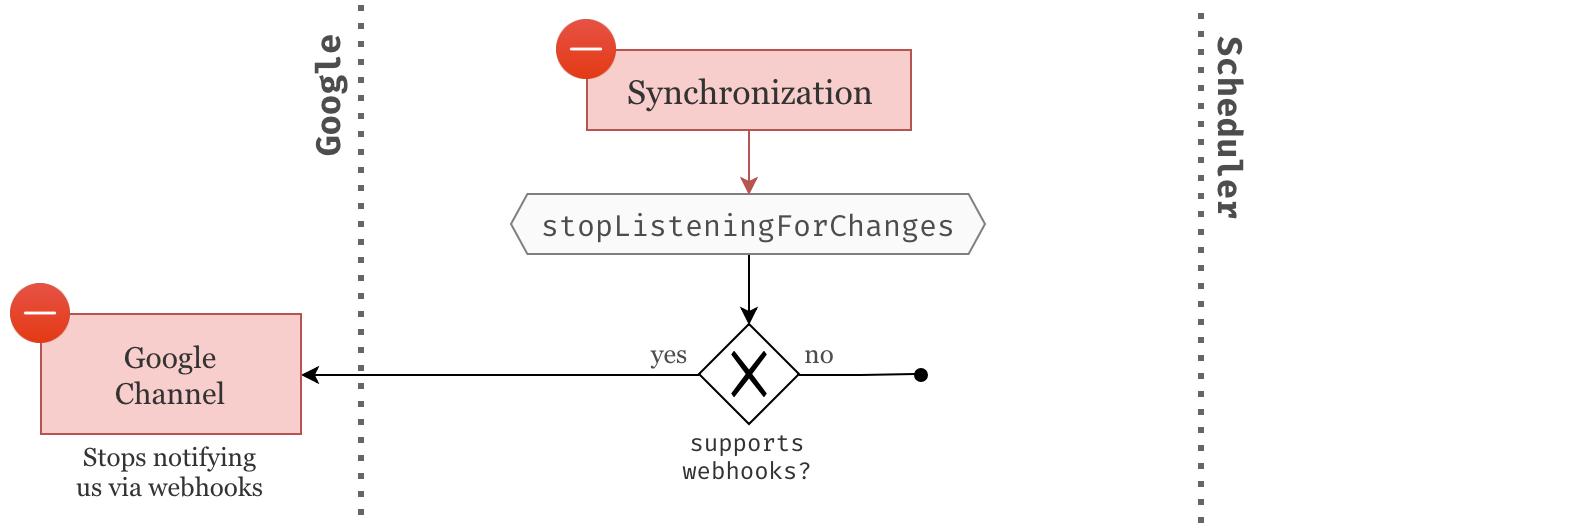 Stopping webhooks diagram